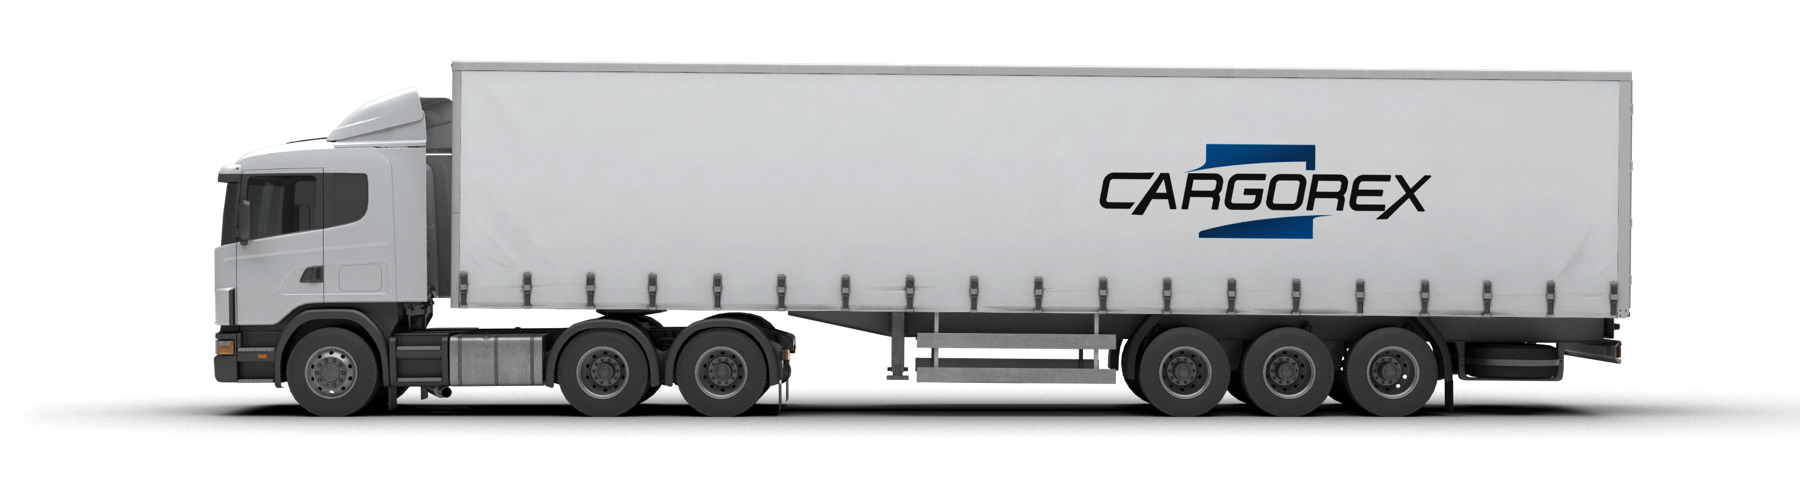 Cargorexpsd online - Hampshire Freight Services